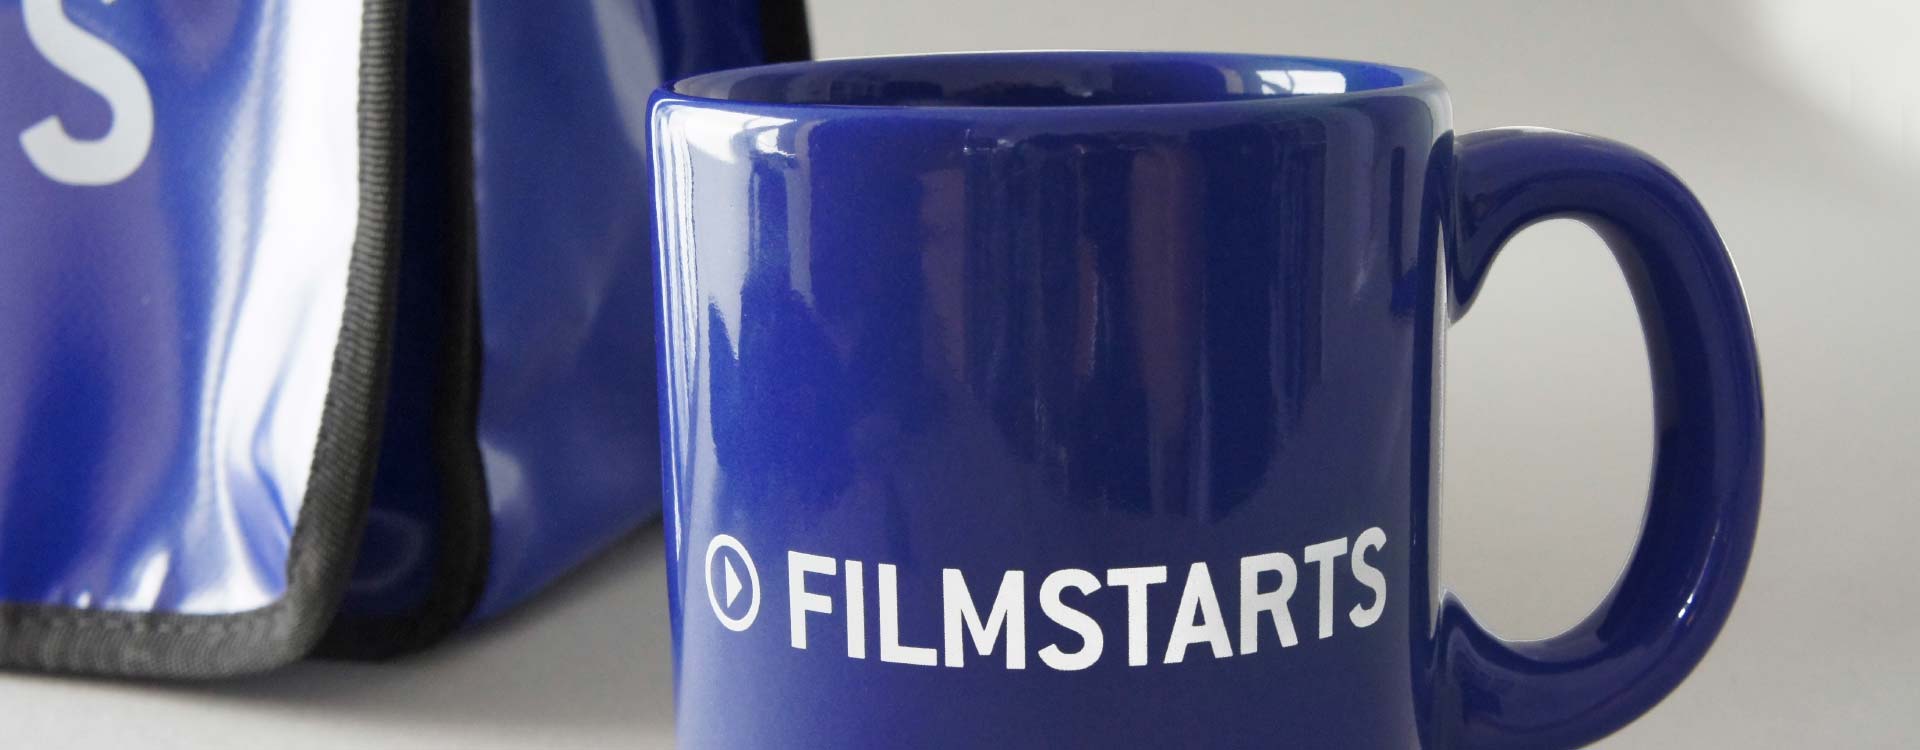 Mousepad with Filmstarts logo